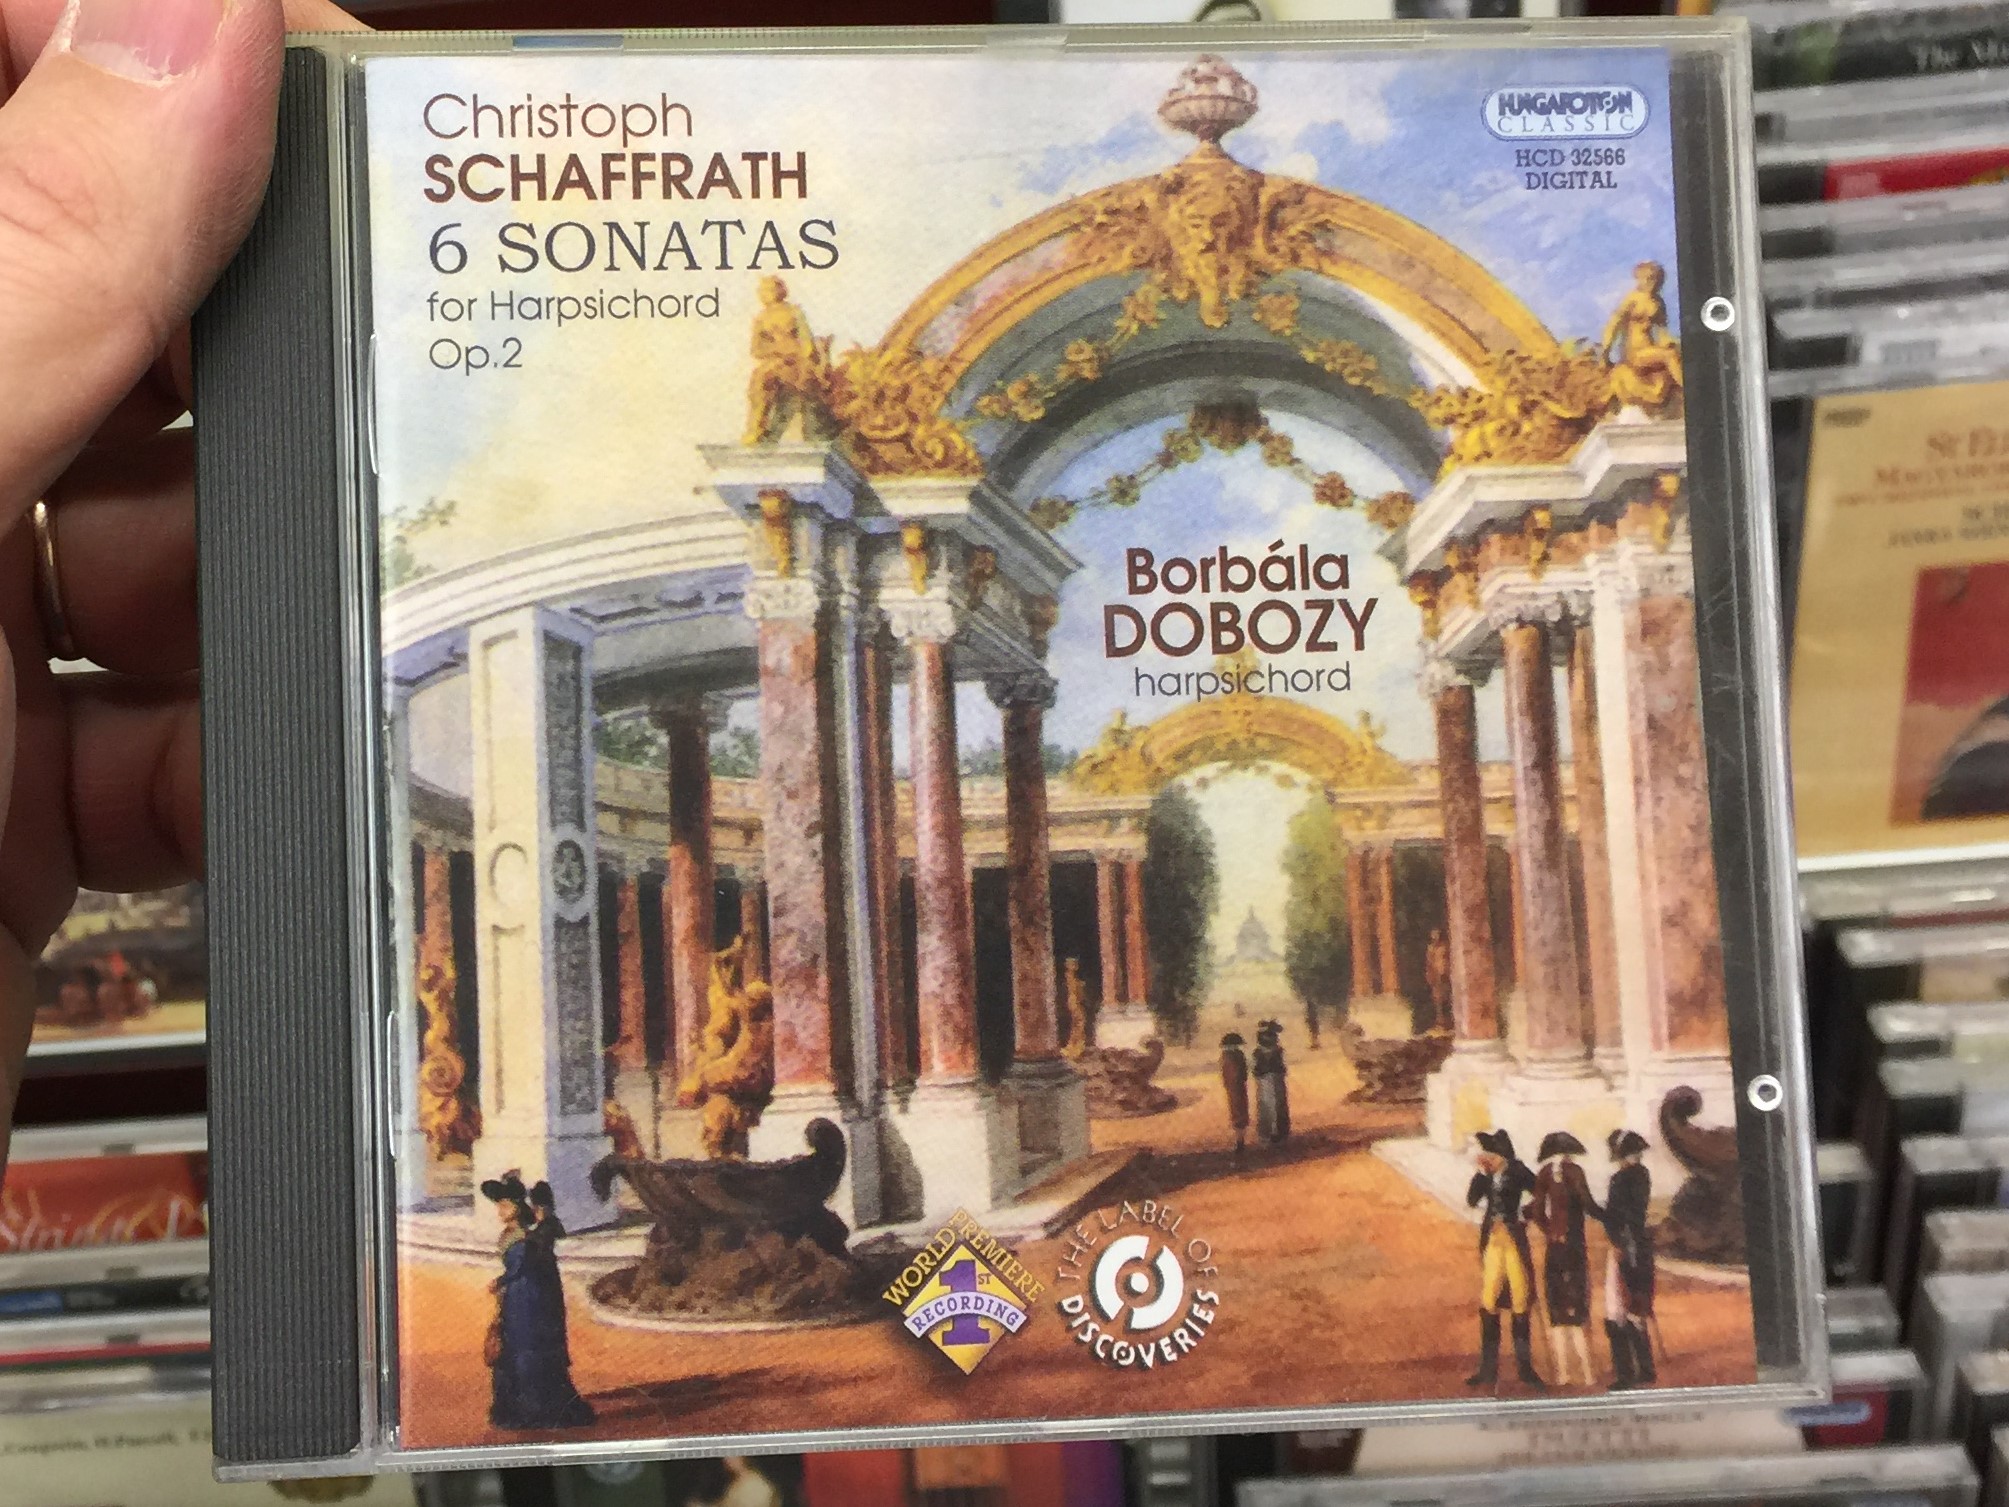 christoph-schaffrath-6-sonatas-for-harpsichord-op.-2-borbala-dobozy-harpsichord-hungaroton-classic-audio-cd-2008-stereo-hcd-32566-1-.jpg